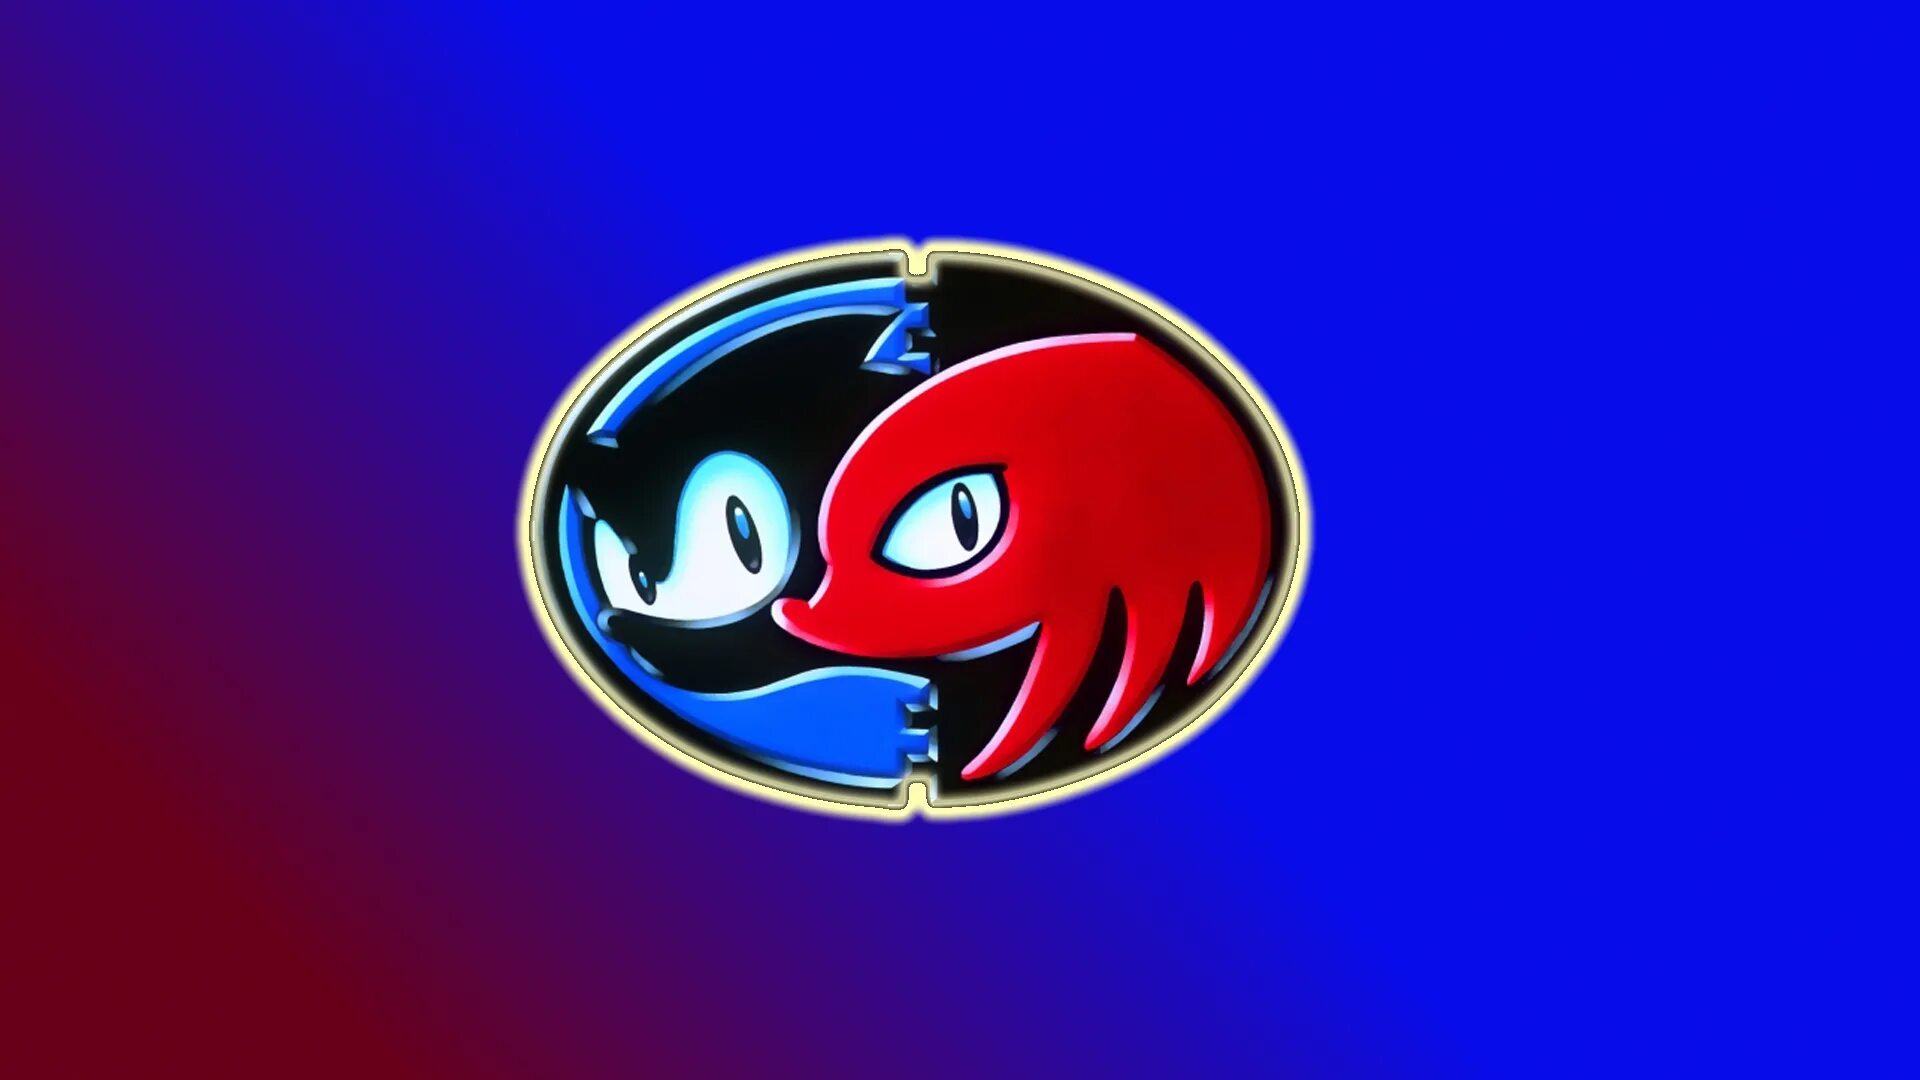 Sonic knuckles air. Sonic & Knuckles. НАКЛЗ логотип. Соник и НАКЛЗ лого. Лого Соник 3 и НАКЛЗ.